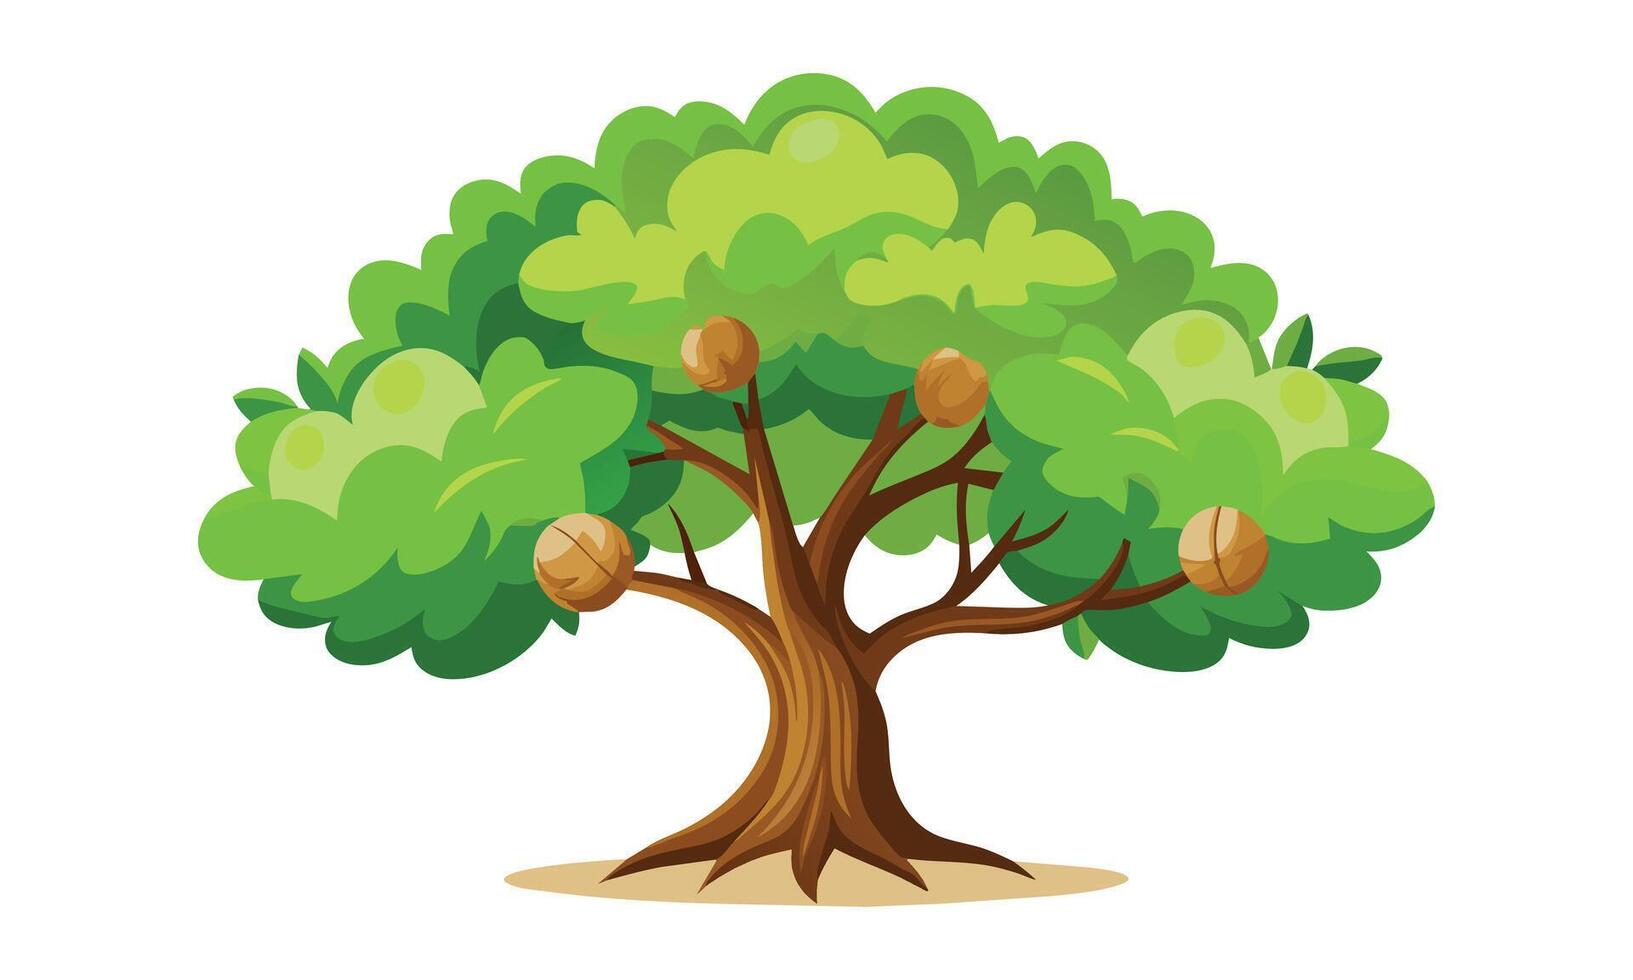 Walnut tree isolated flat illustration on white background vector